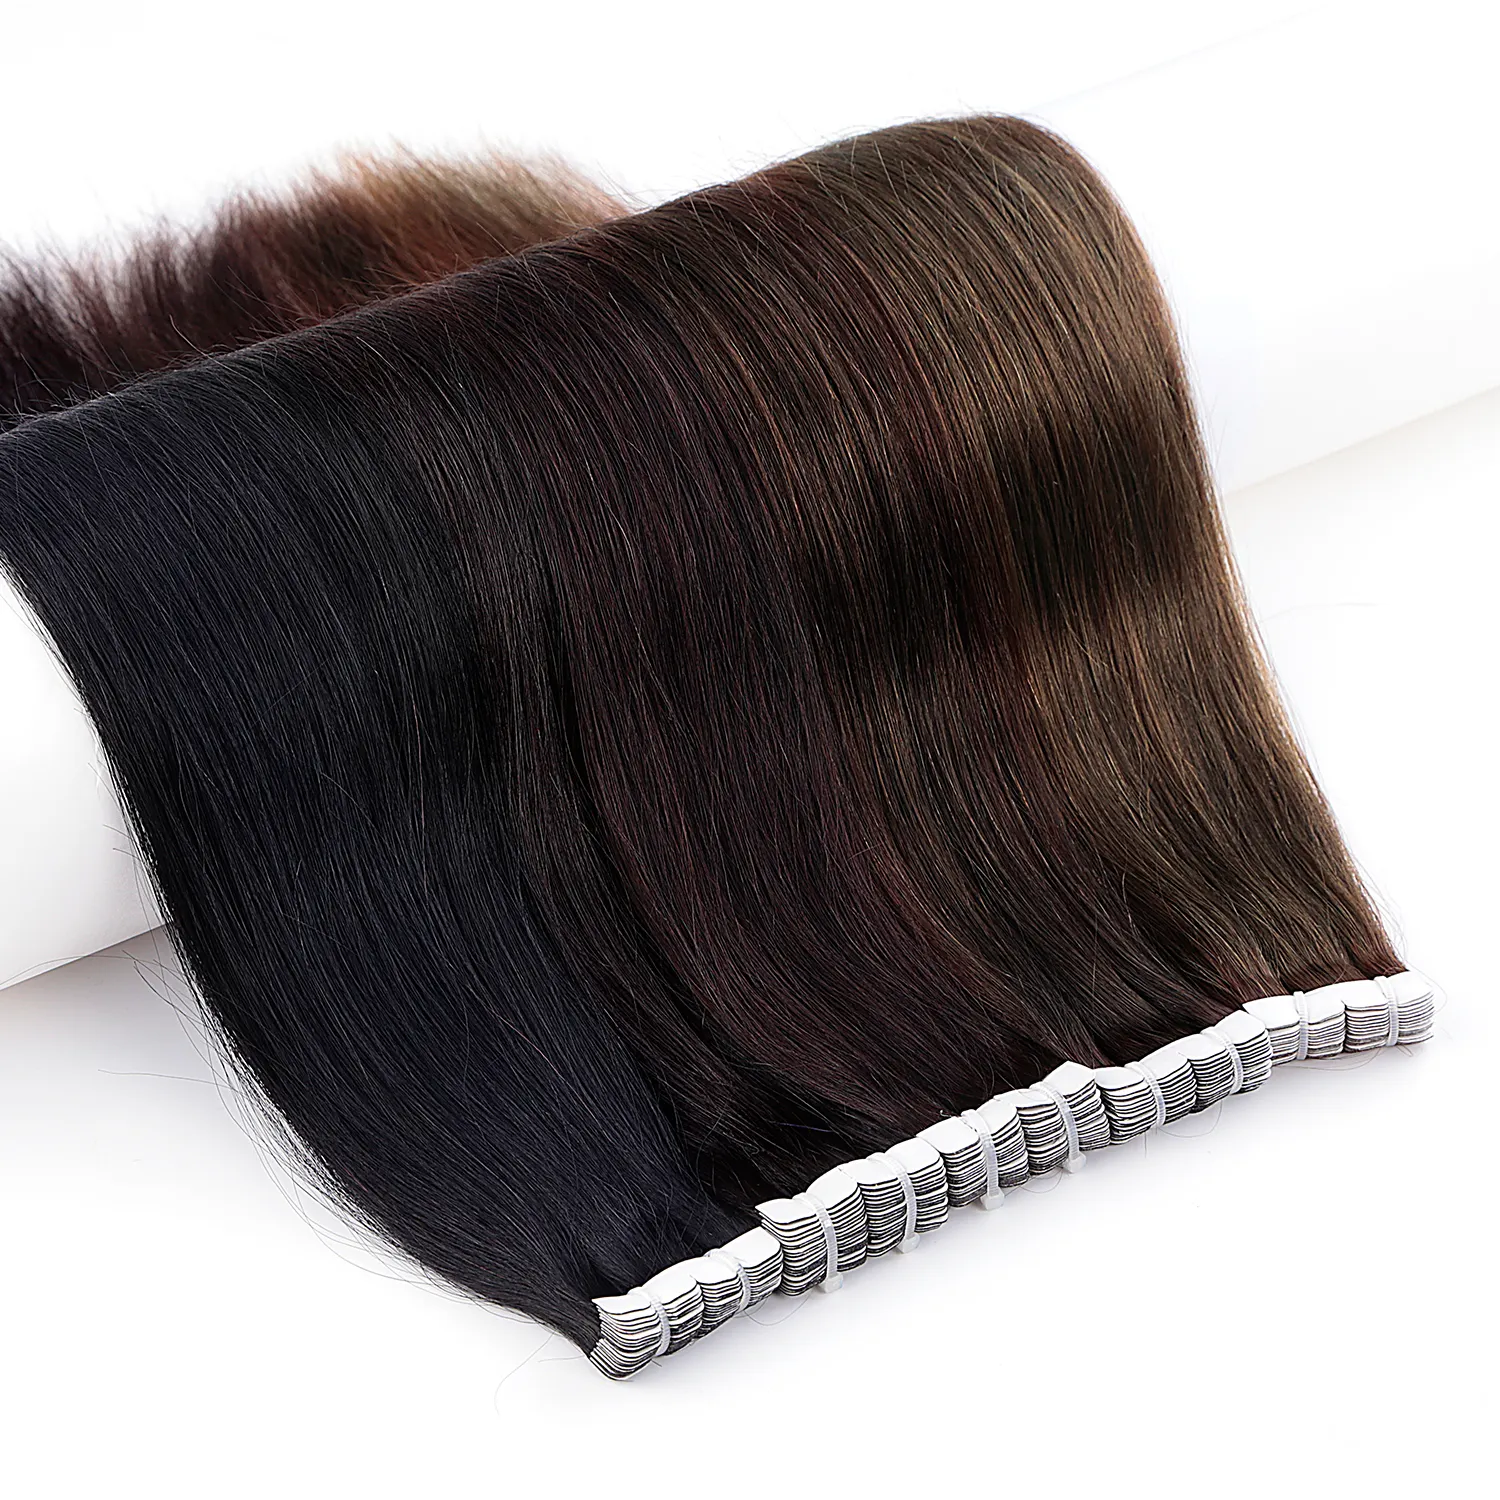 Salon Levert Rauwe 100% Menselijke Remy Slanke Dubbel Getekende Minitape In Haarverlenging Ombre Balayage Kleur Onzichtbaar Oem Groothandel